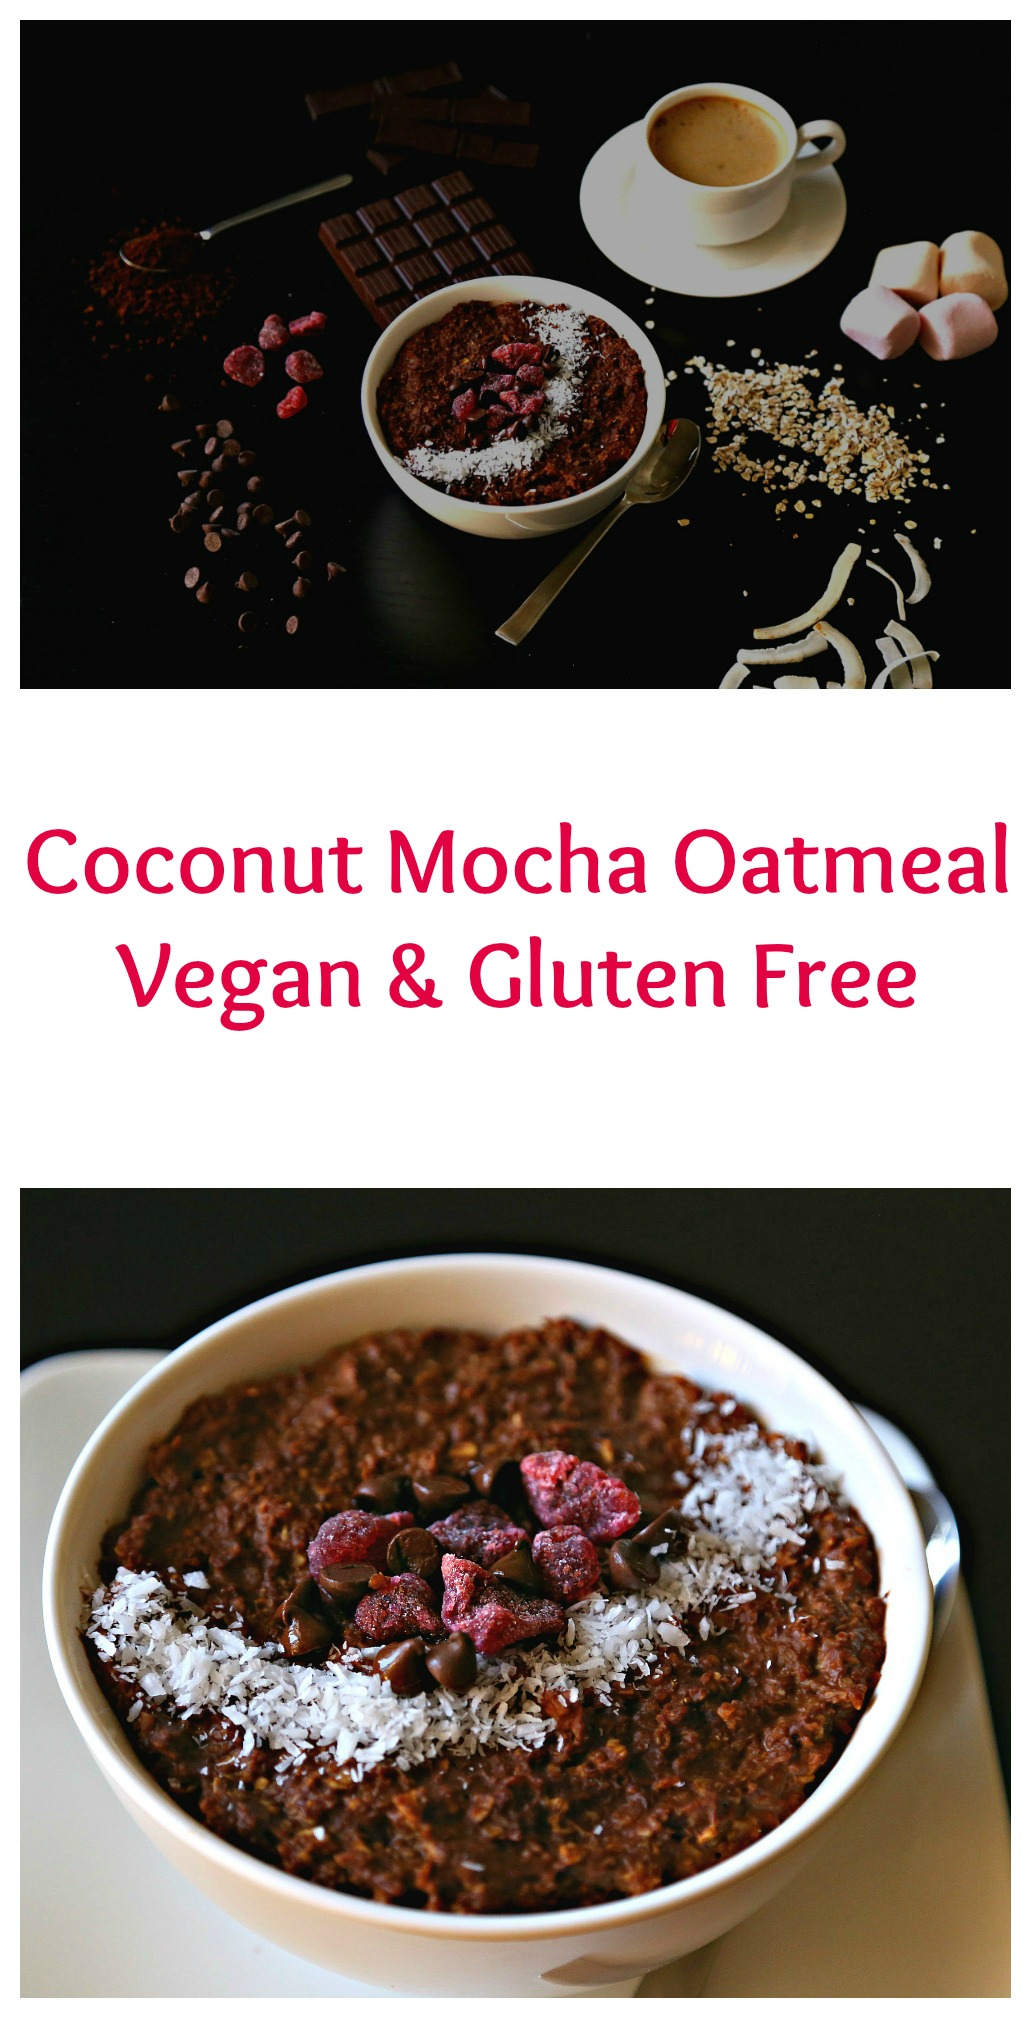 picmonkey-collage-coconut-mocha-oatmeal-edited